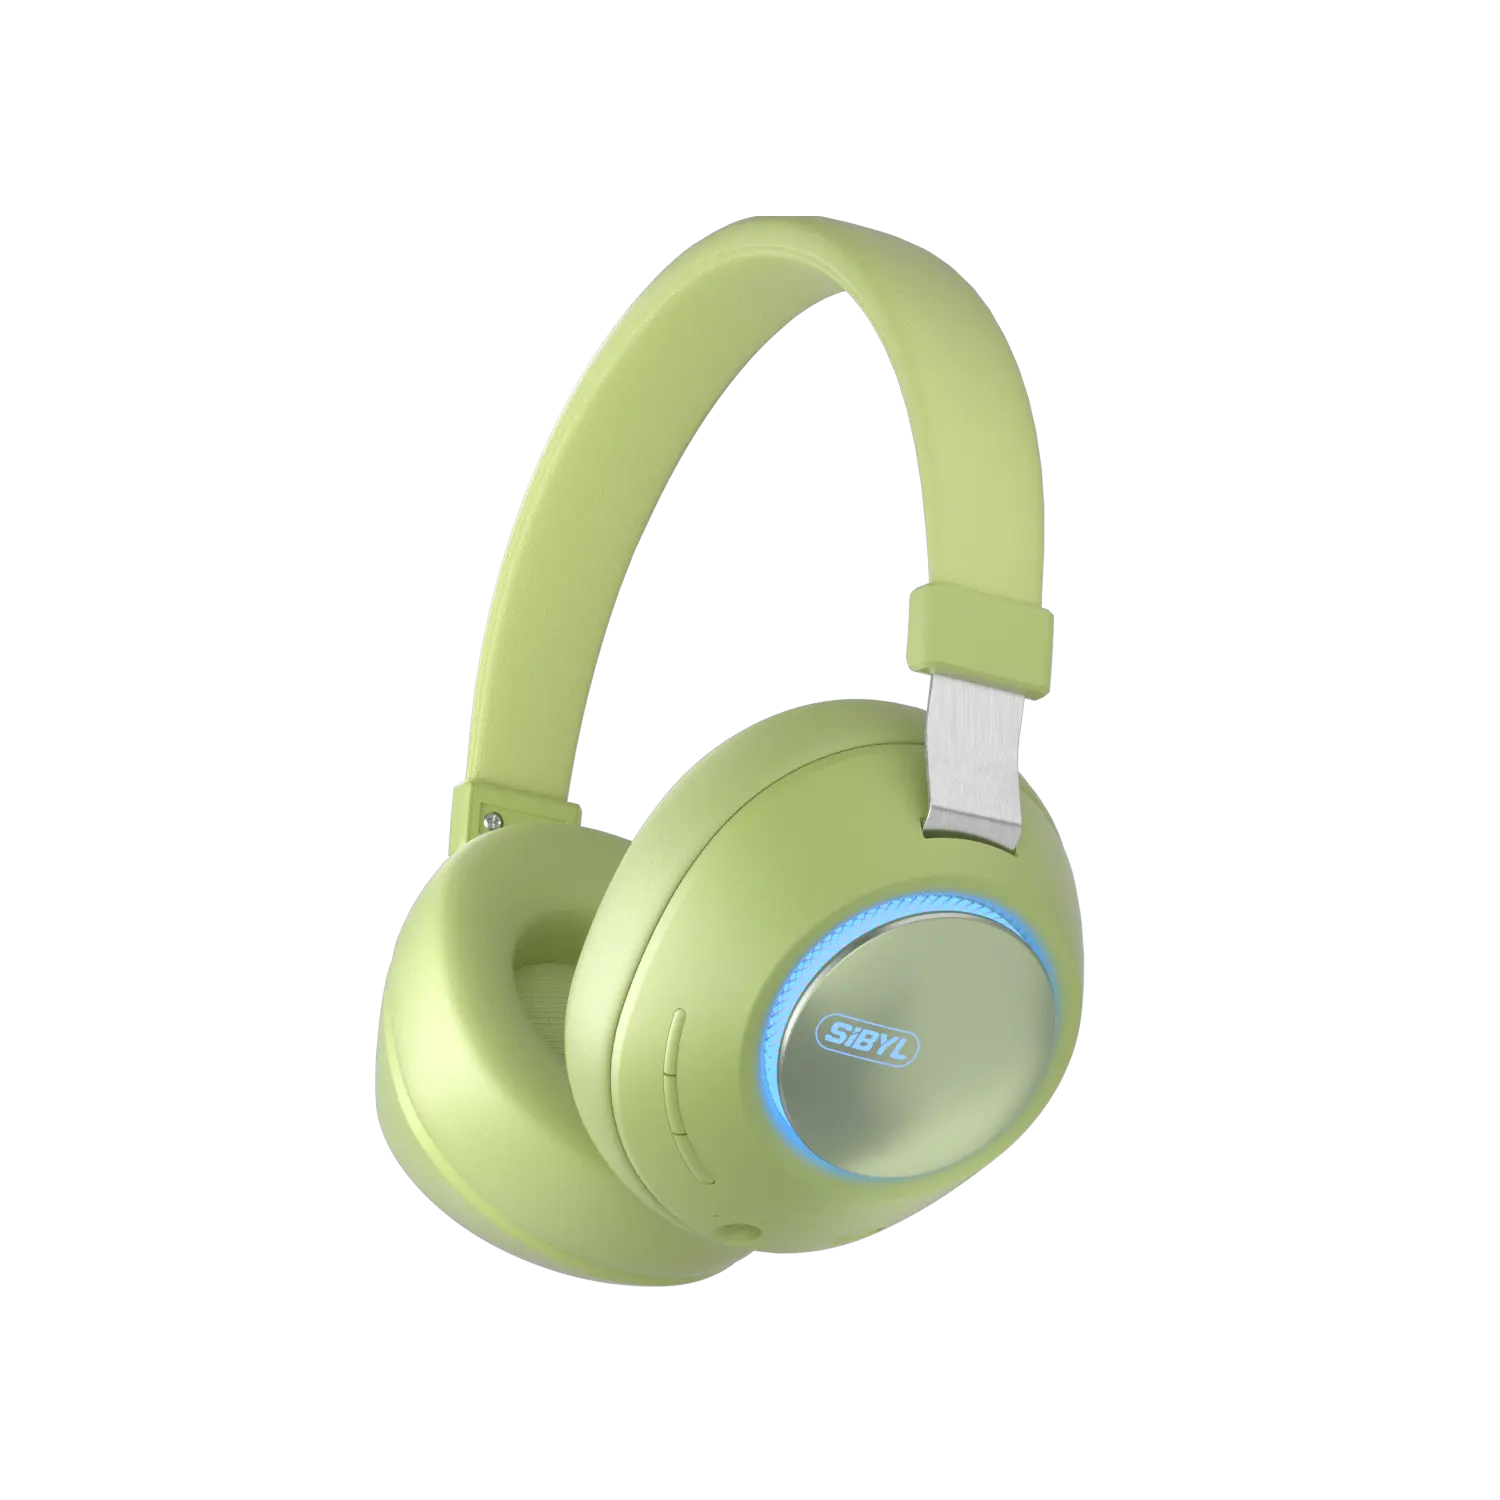 Sibyl Headphone Bluetooth nirkabel, Headset Bluetooth nirkabel ANC penghilang kebisingan aktif dengan Mic dan lampu